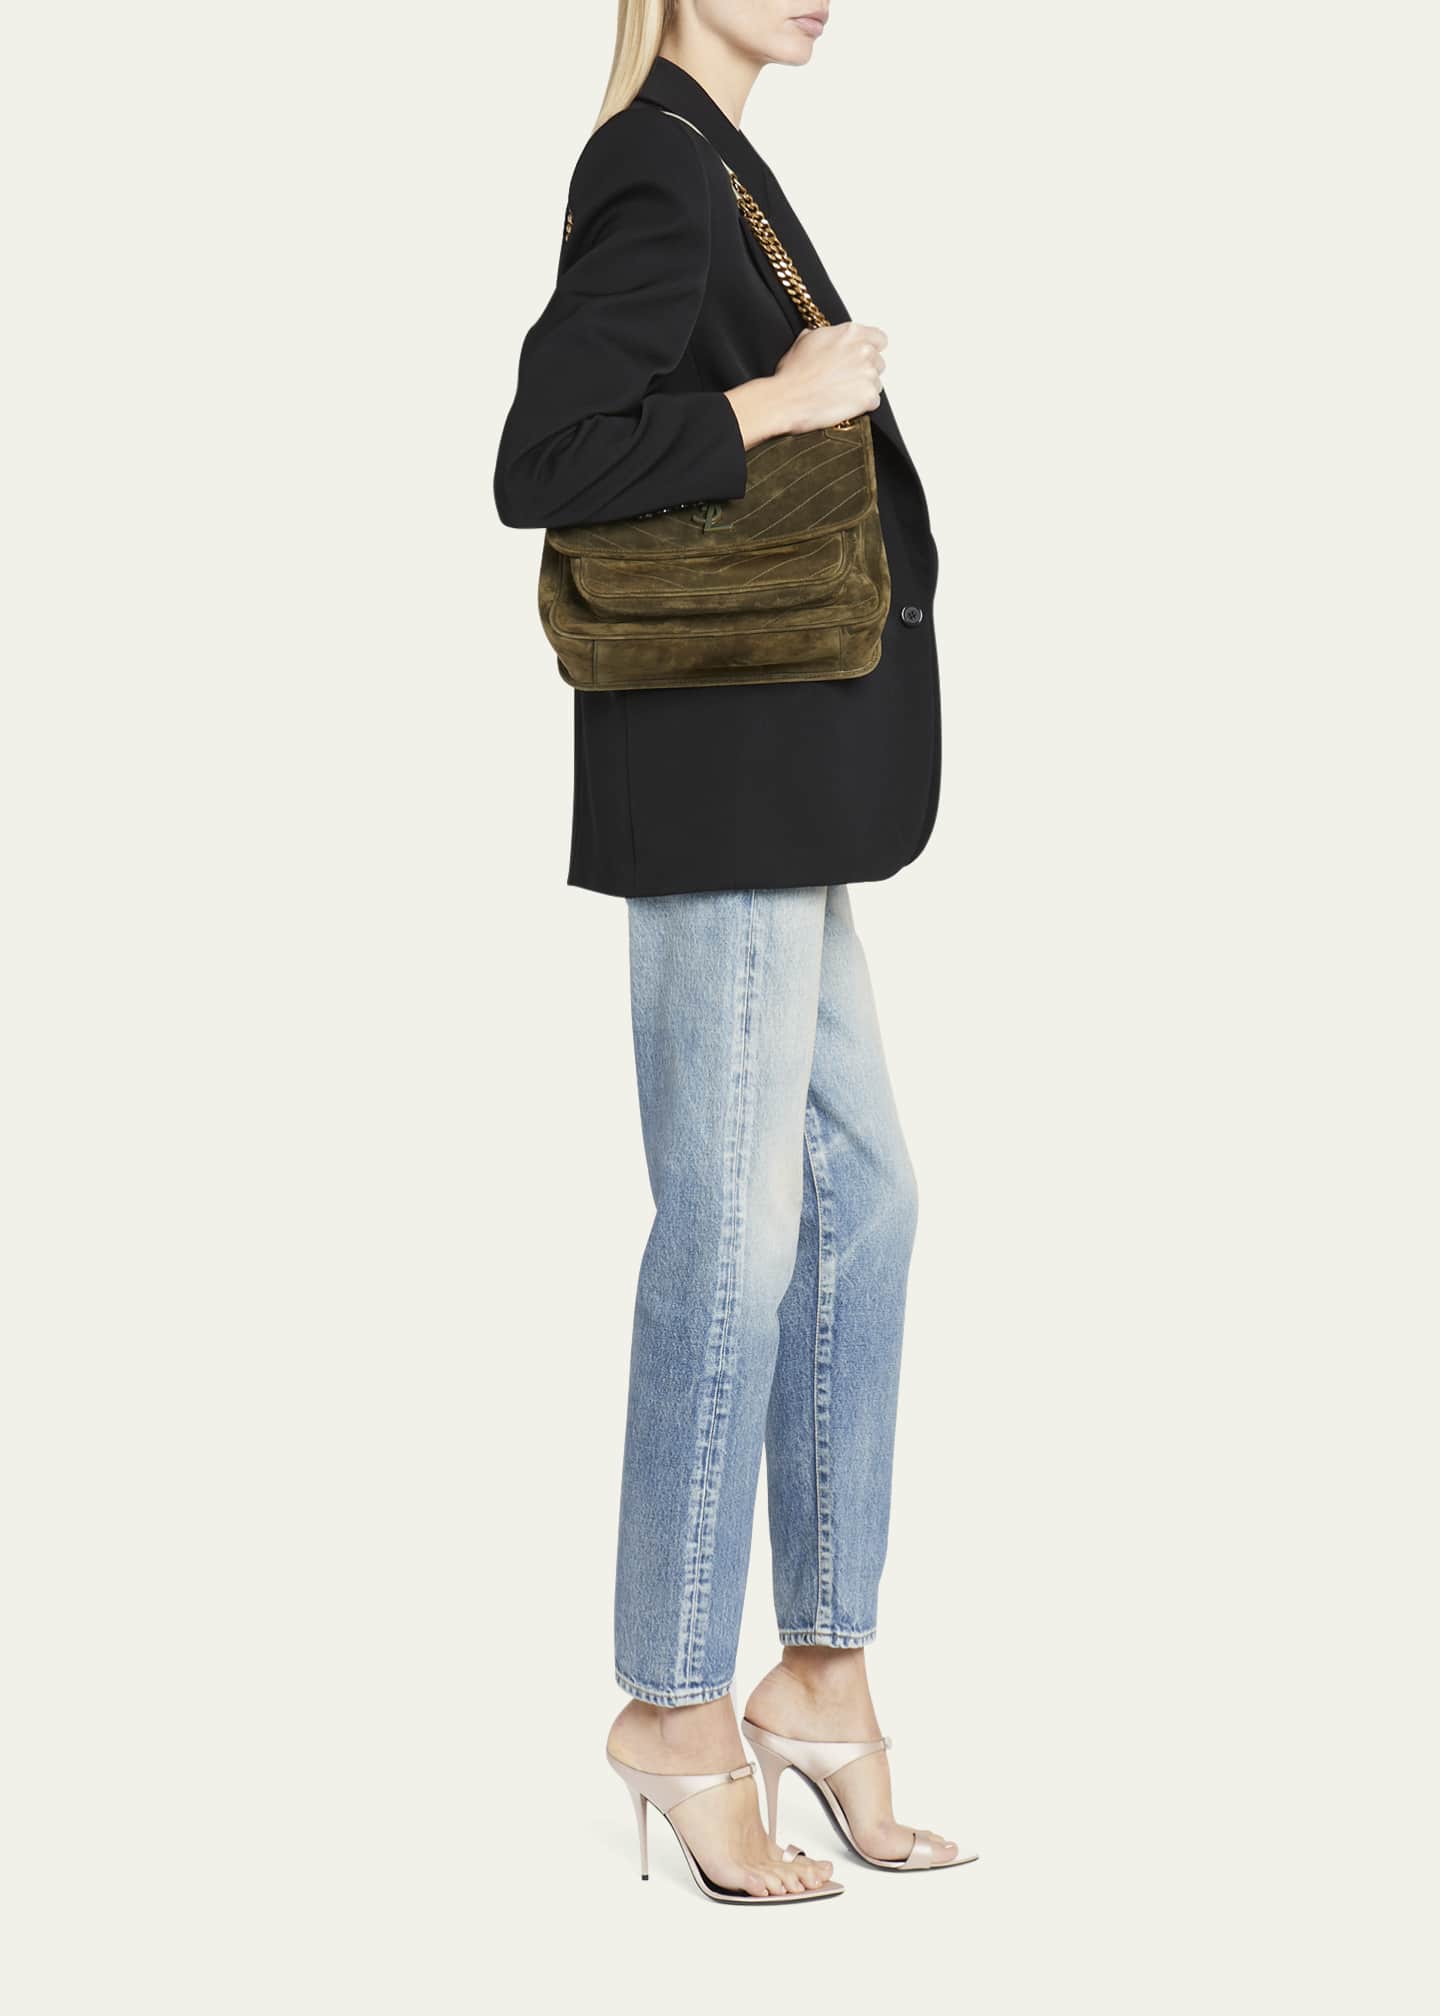 Saint Laurent Women's Niki Leather Shoulder Bag